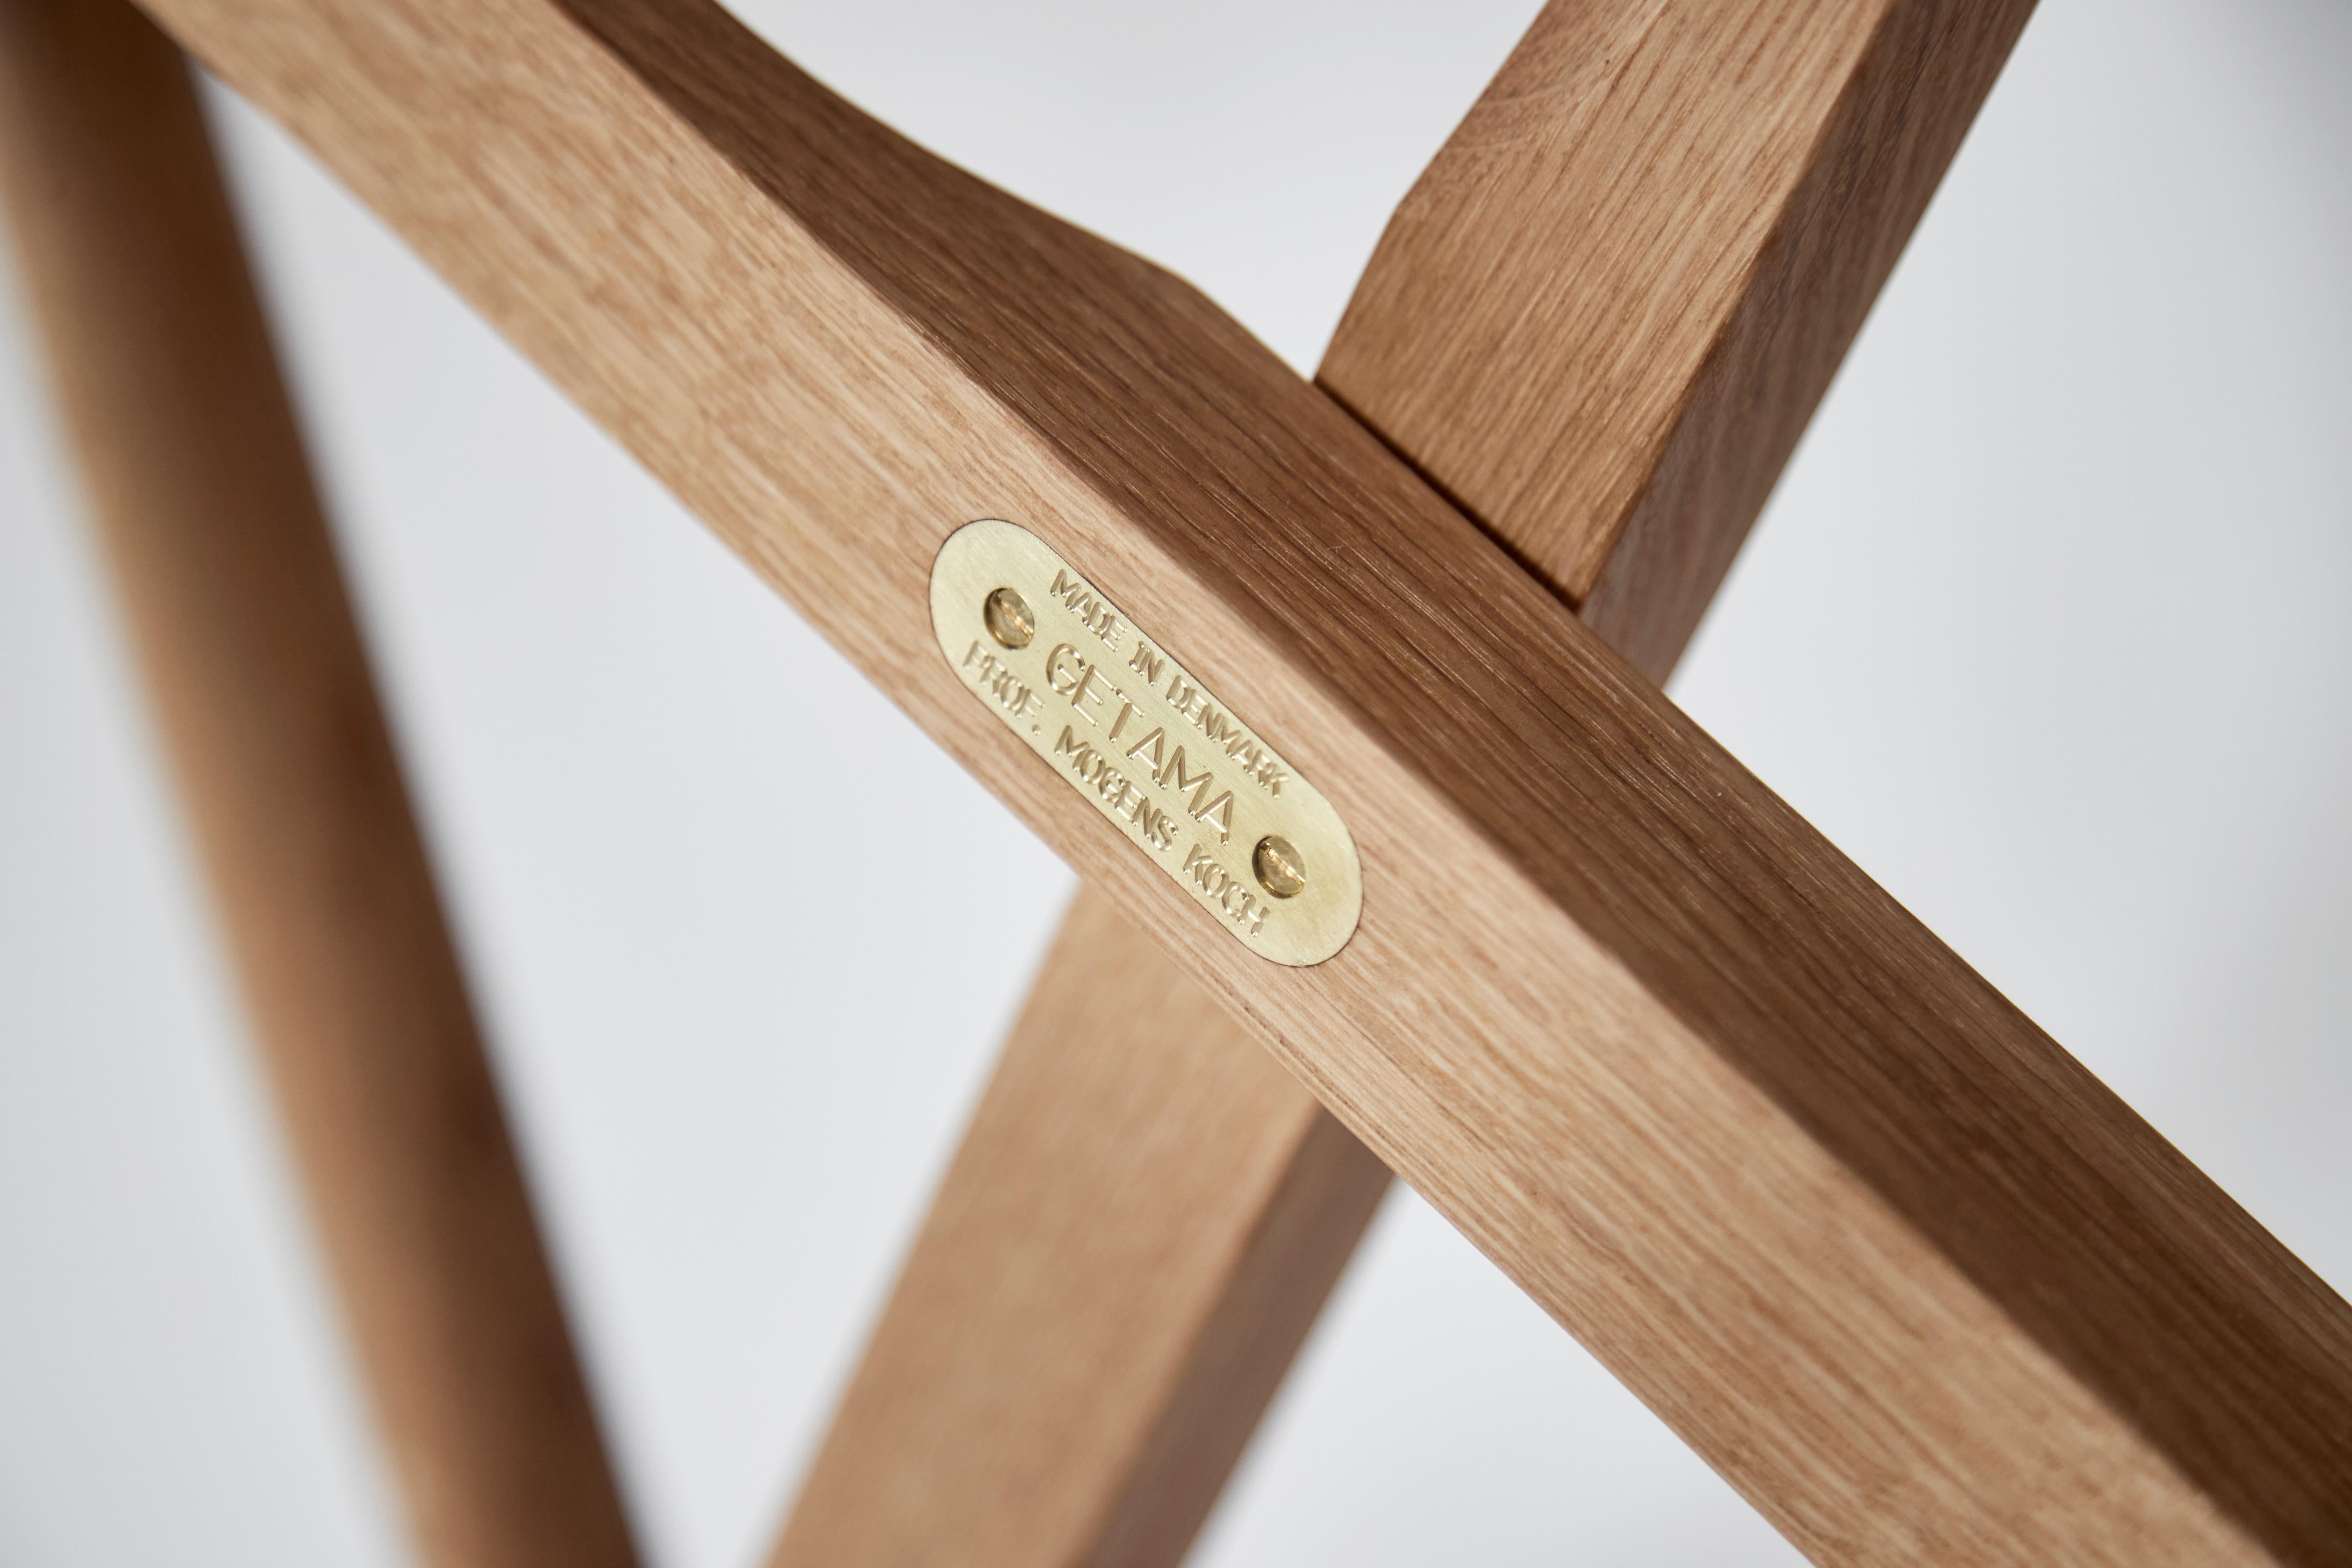 Danish Mid-Century Modern Scandinavian Chair Folding MK16 by Mogens Koch, New Product For Sale